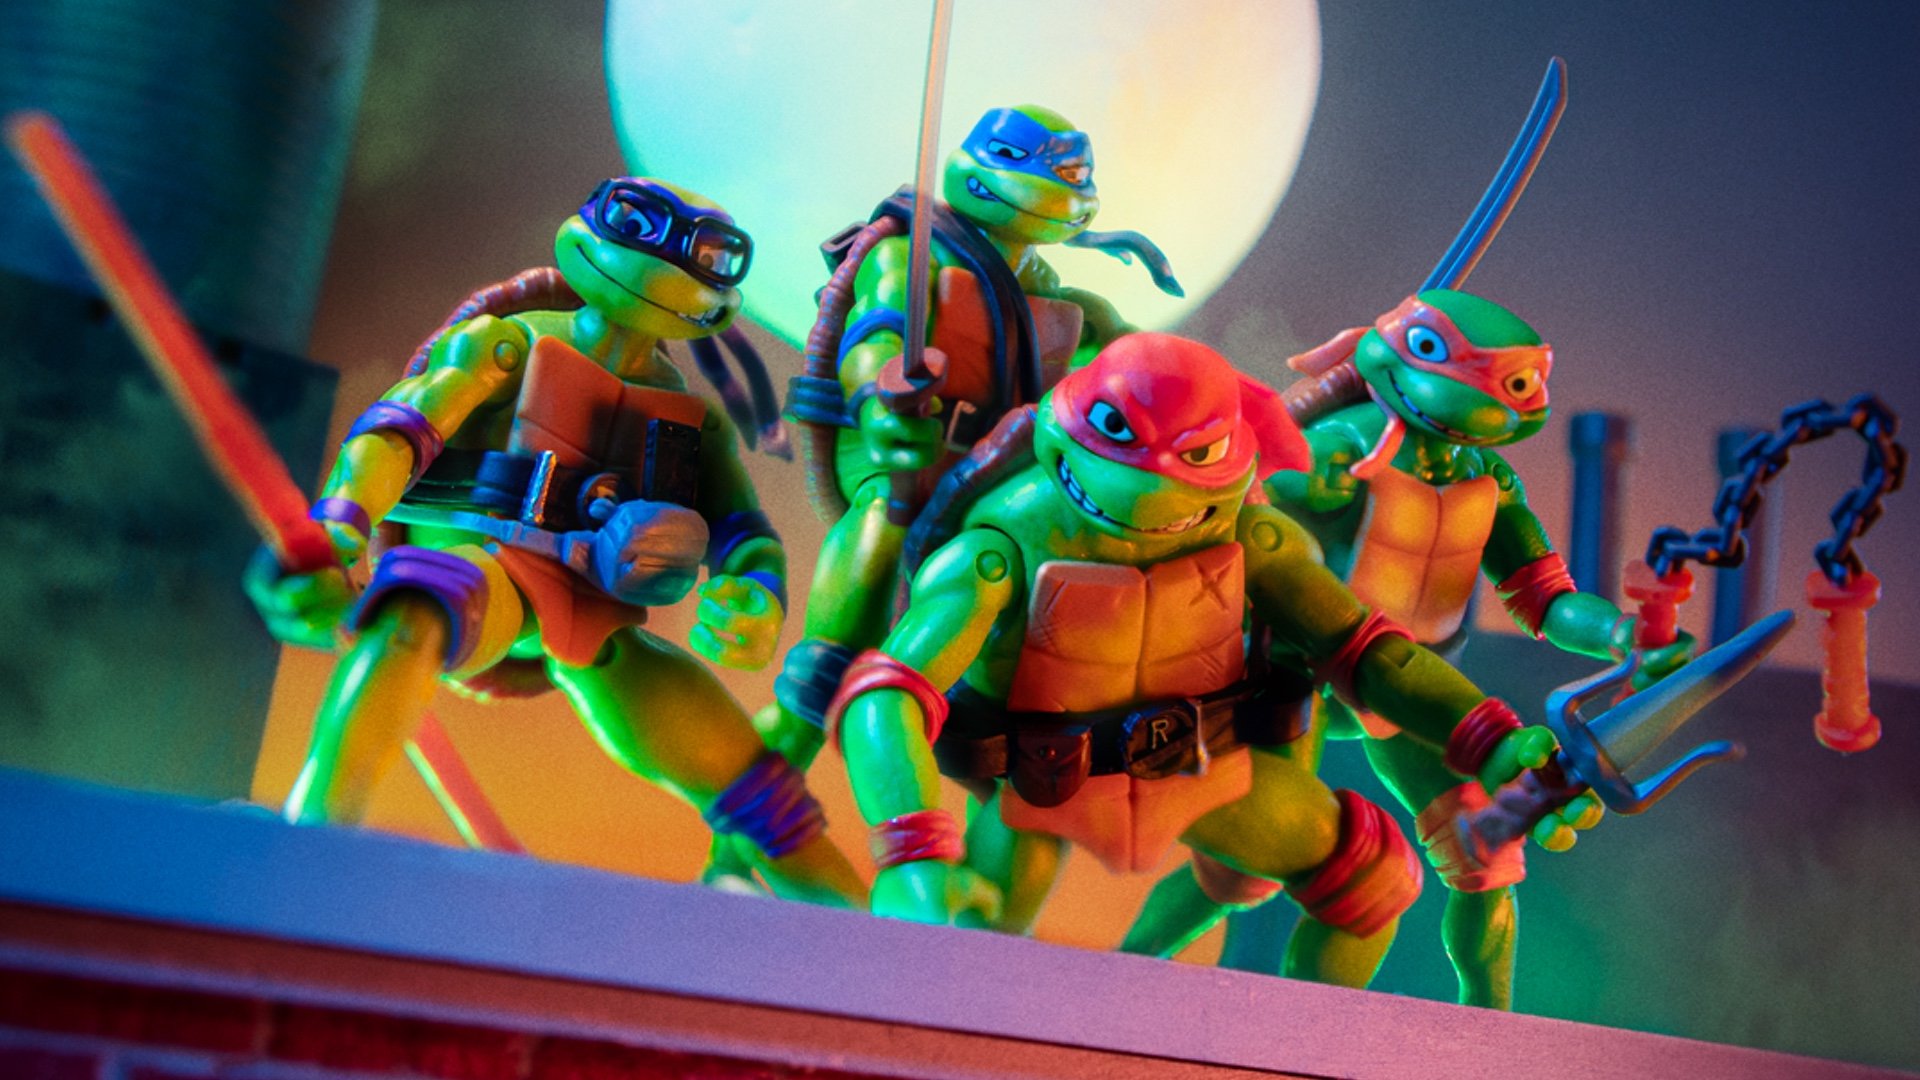 Teenage Mutant Ninja Turtles: Mutant Mayhem: Michelangelo: Action